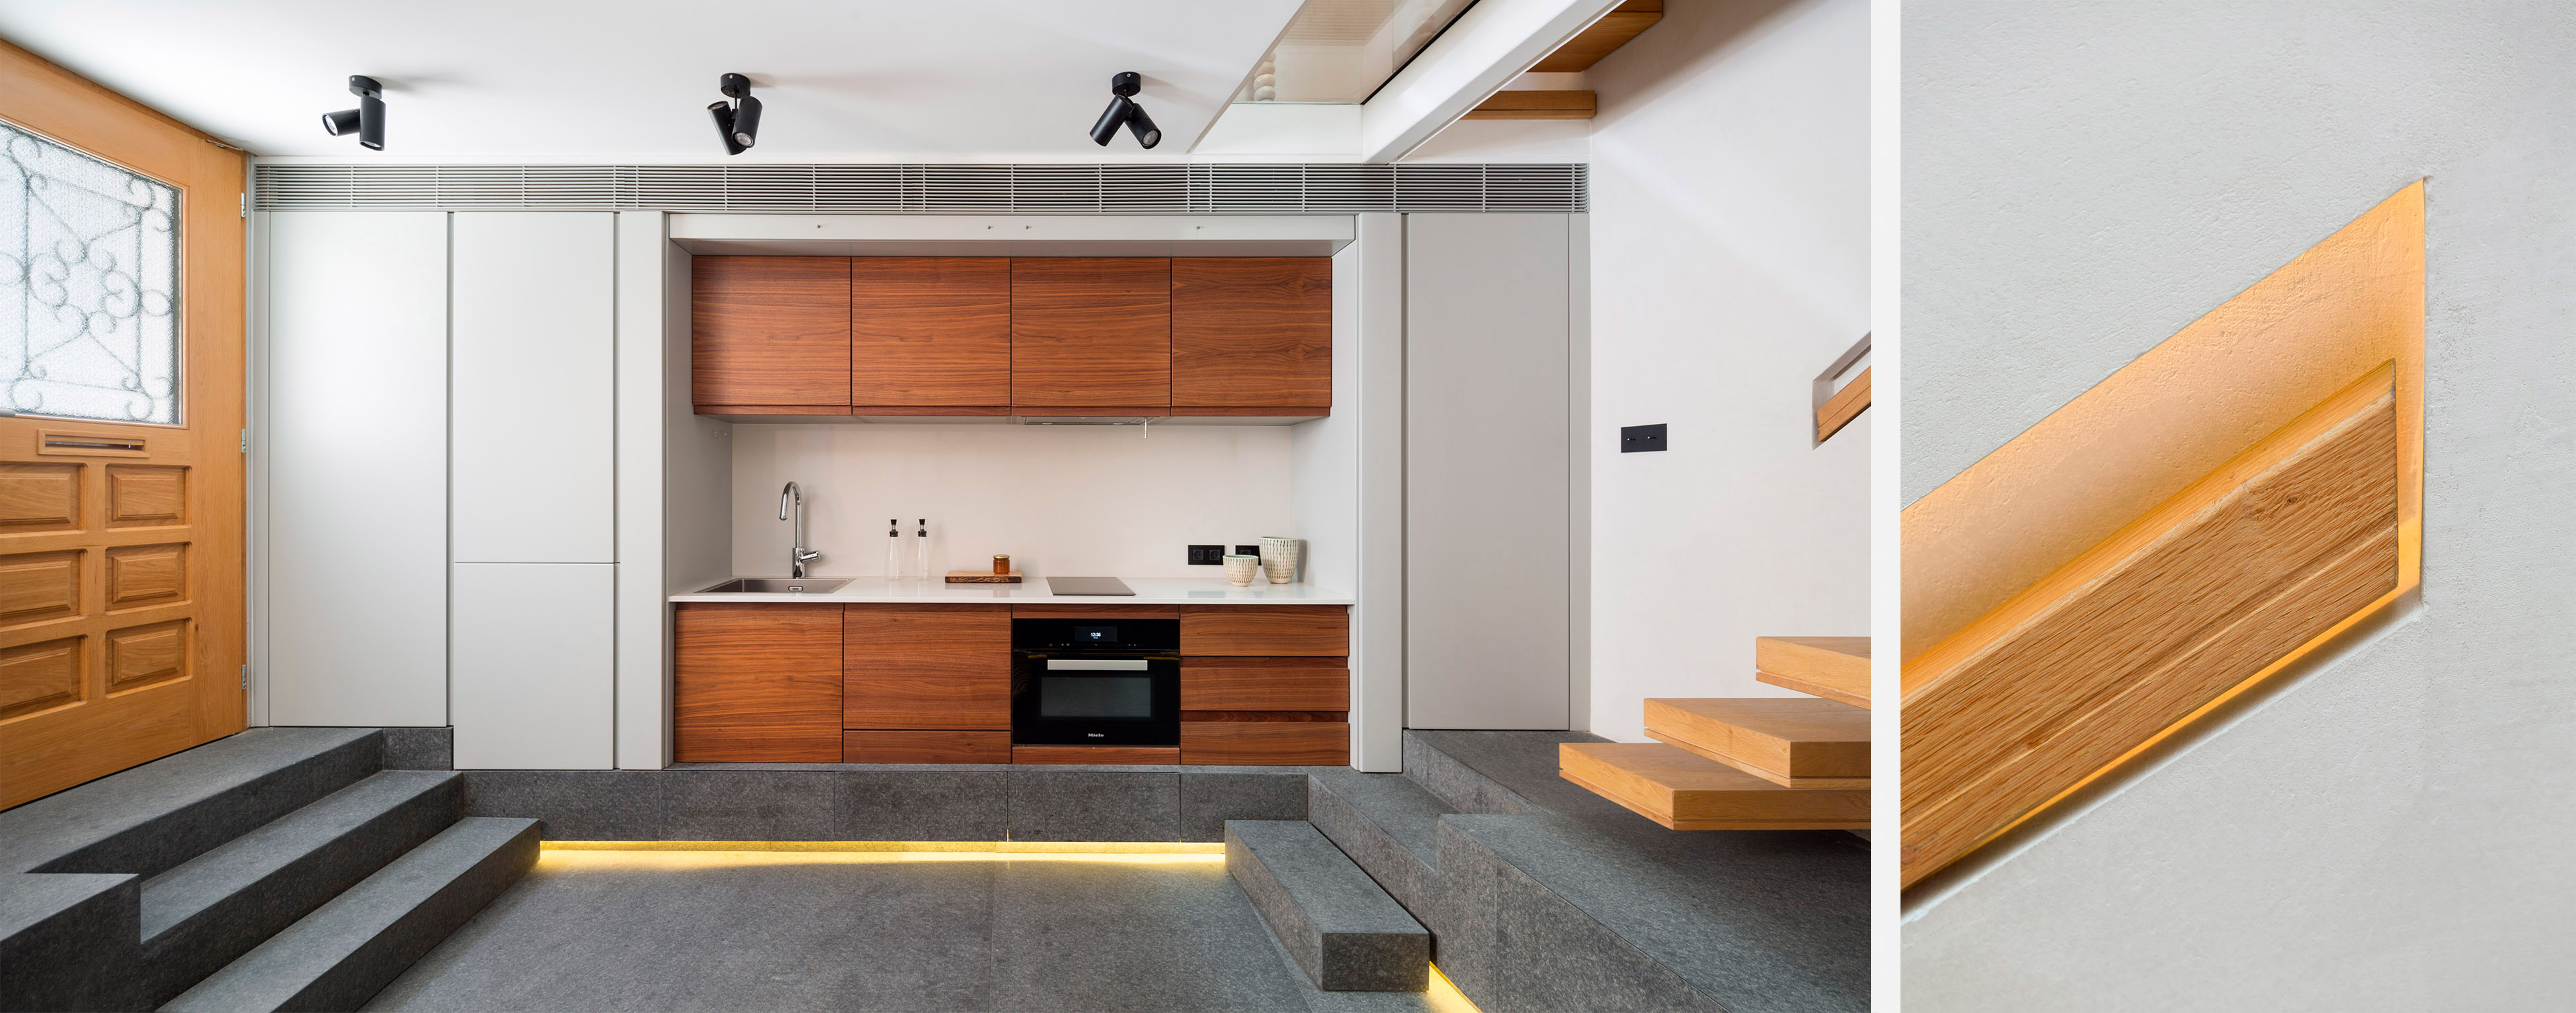 luv studio luxury architects algarve nano house IMG 01 - LUV Studio - Arquitectura y diseño - Barcelona